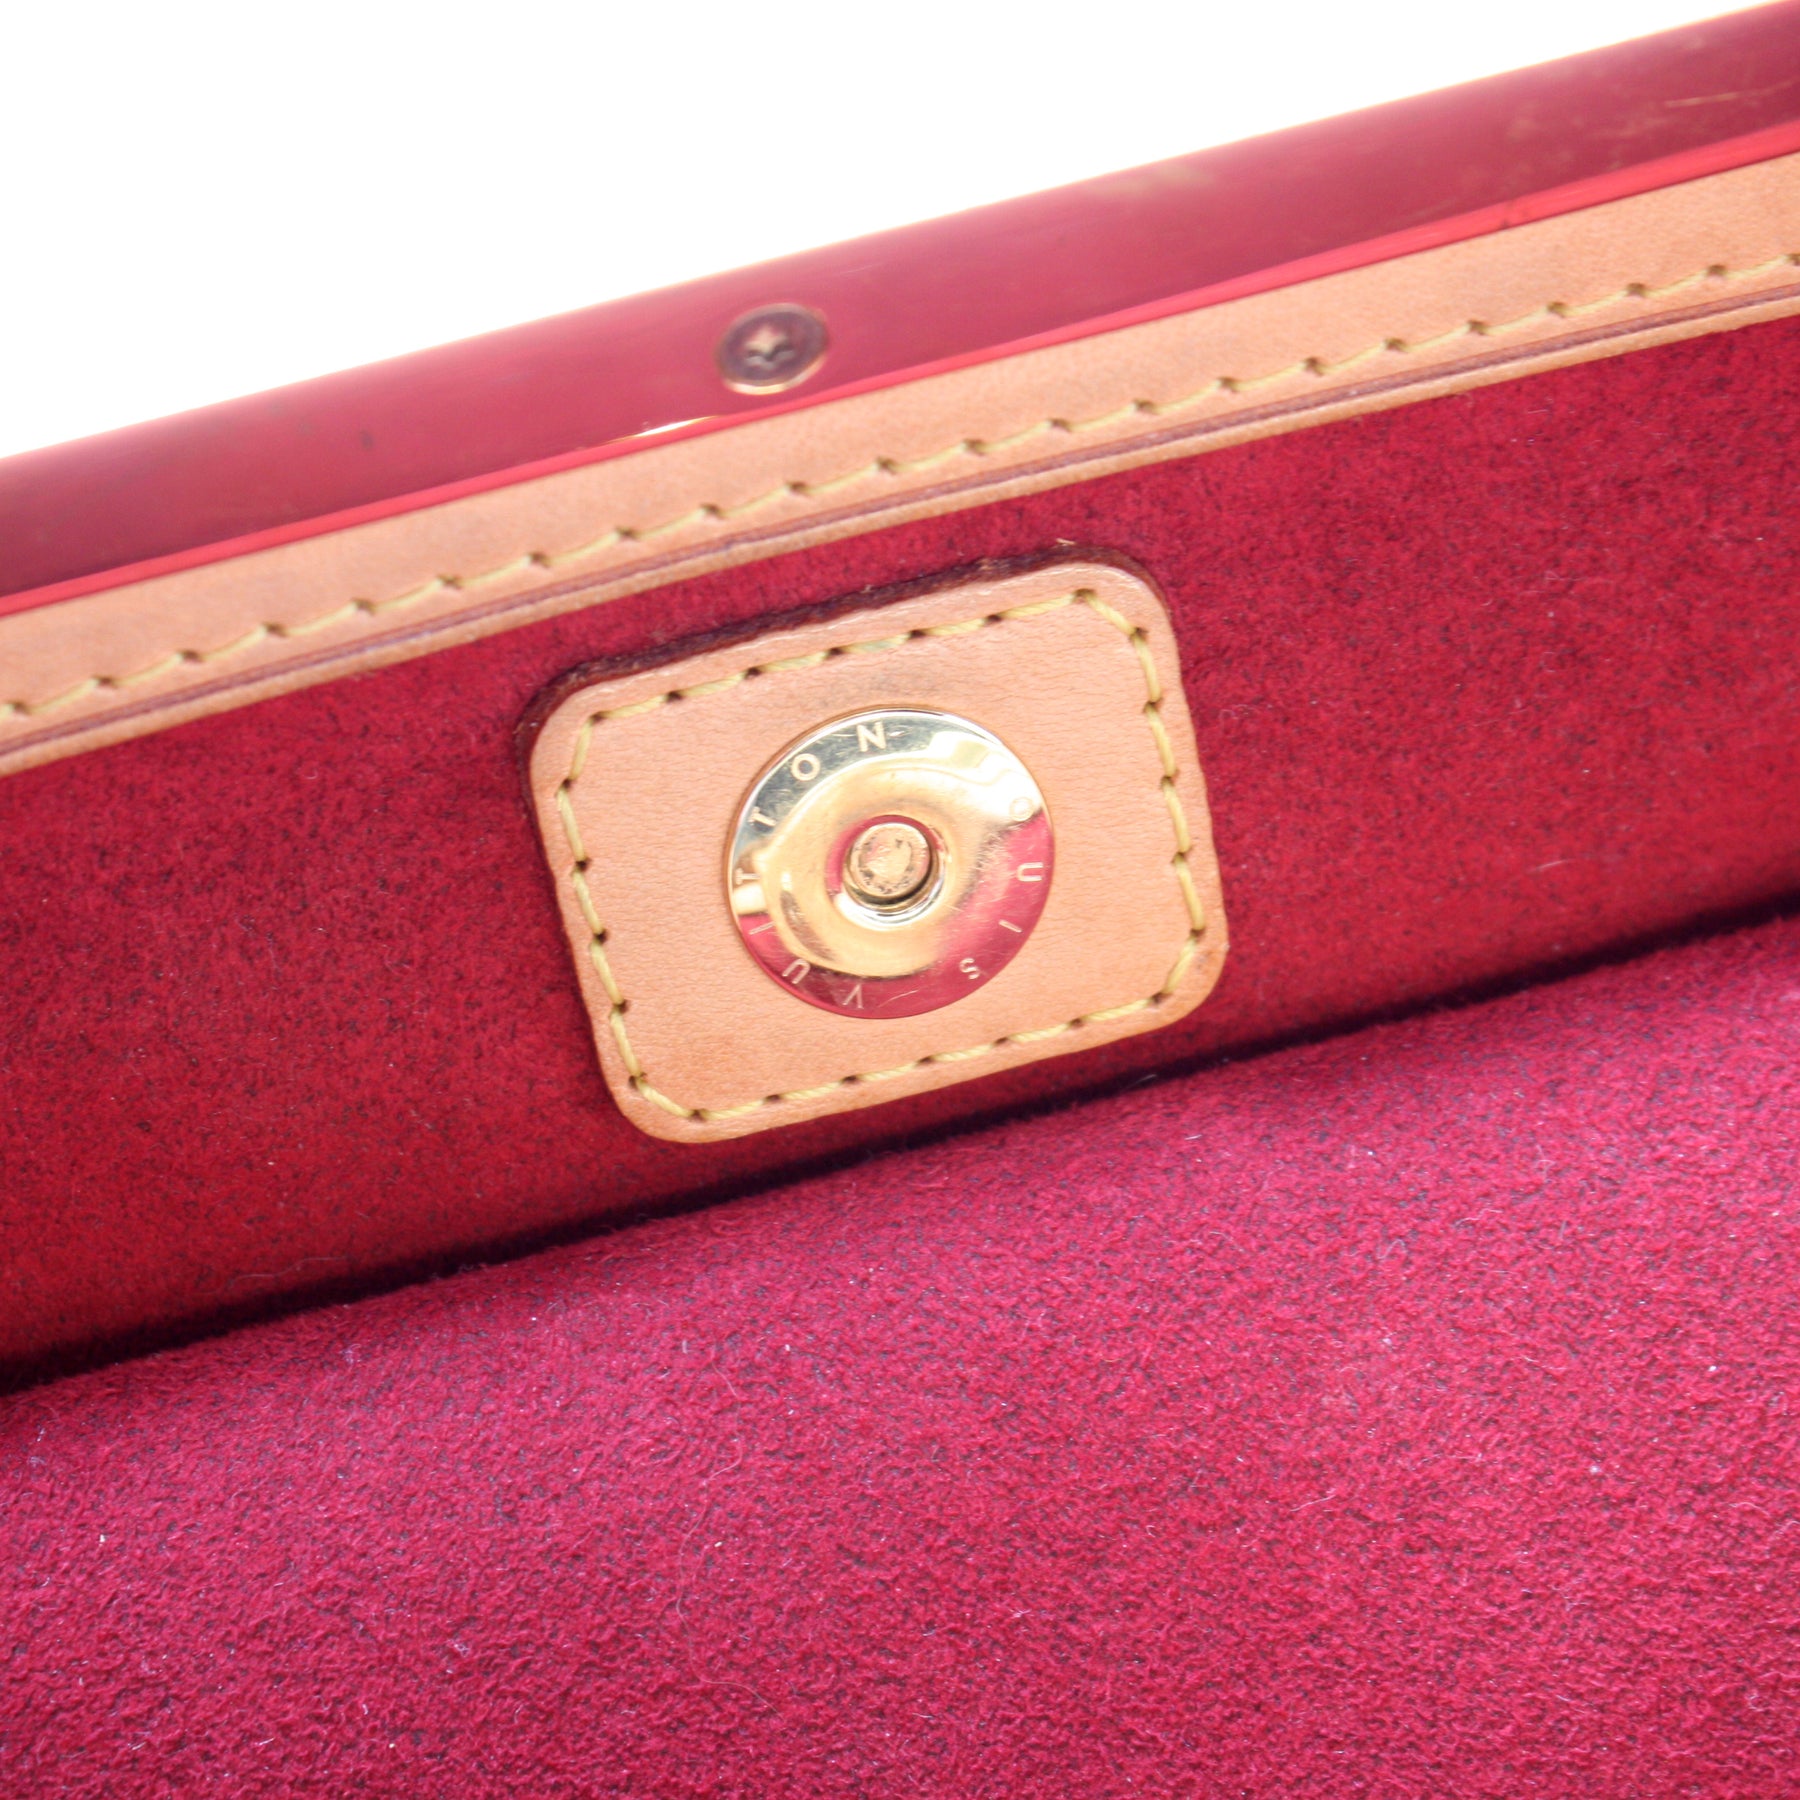 LOUIS VUITTON Handbag Gold Chain Judy MM Monogram multicolor M40255 wh –  Japan second hand luxury bags online supplier Arigatou Share Japan